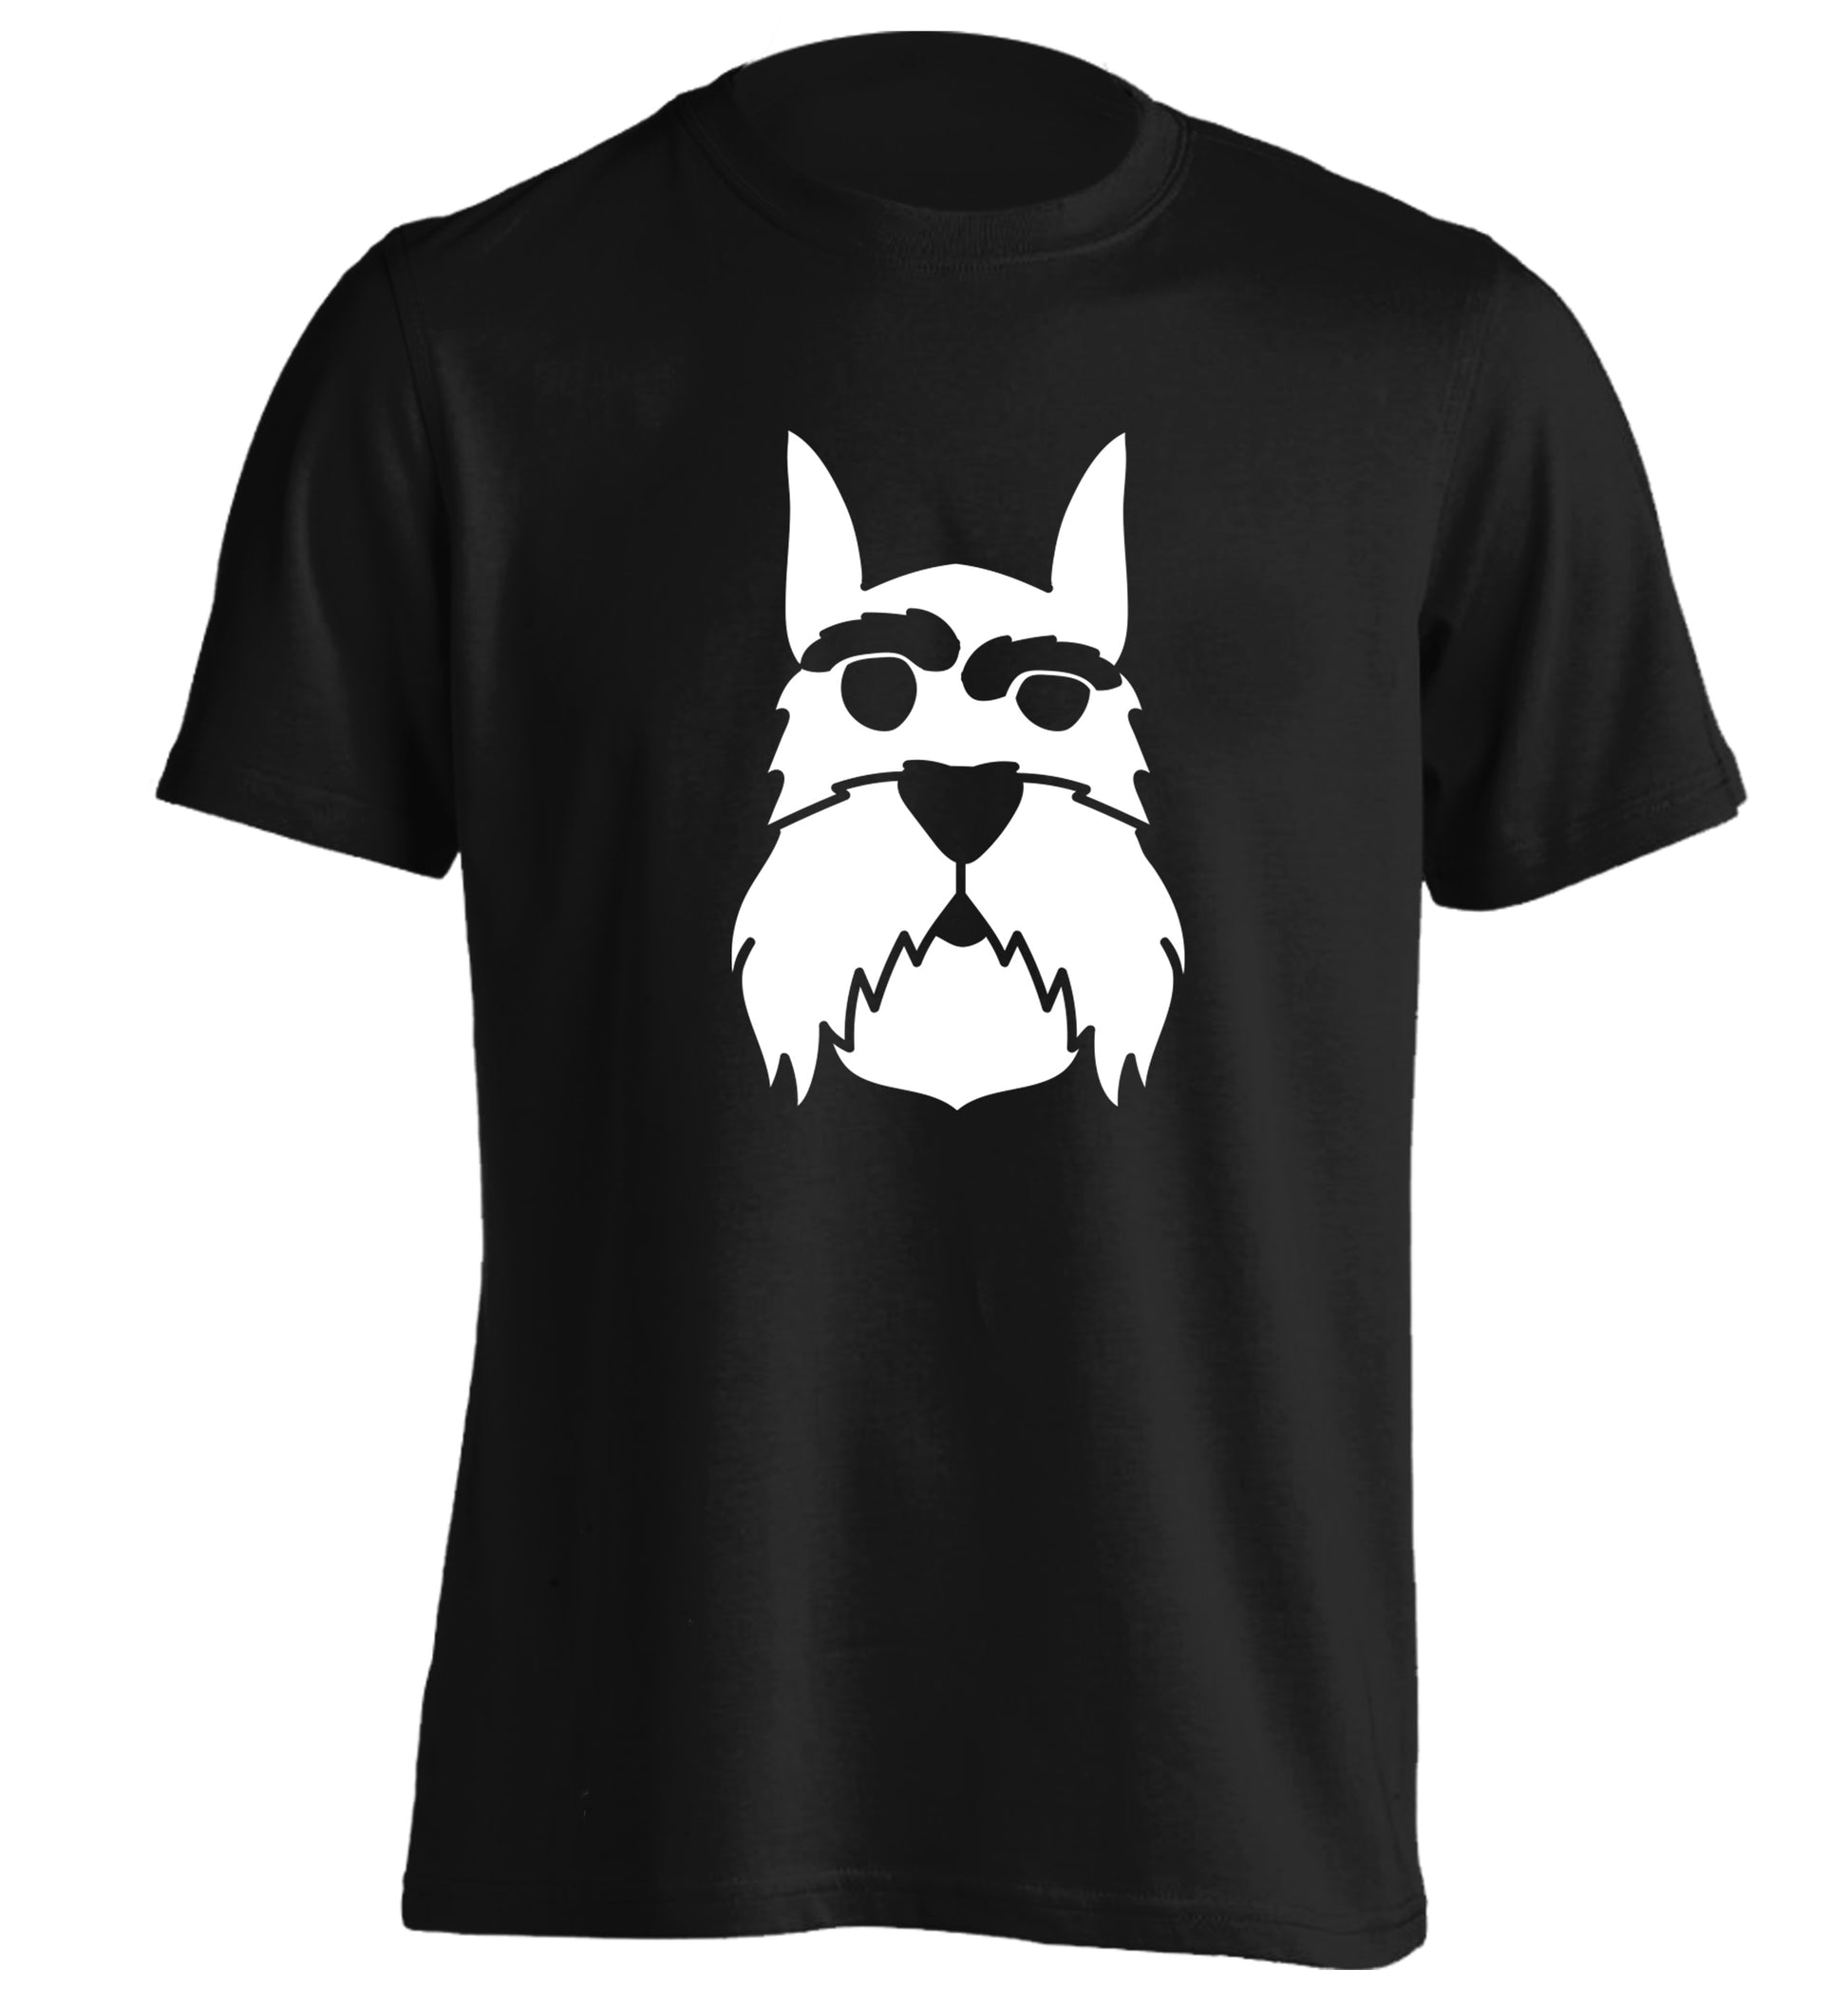 Schnauzer dog illustration adults unisex black Tshirt 2XL